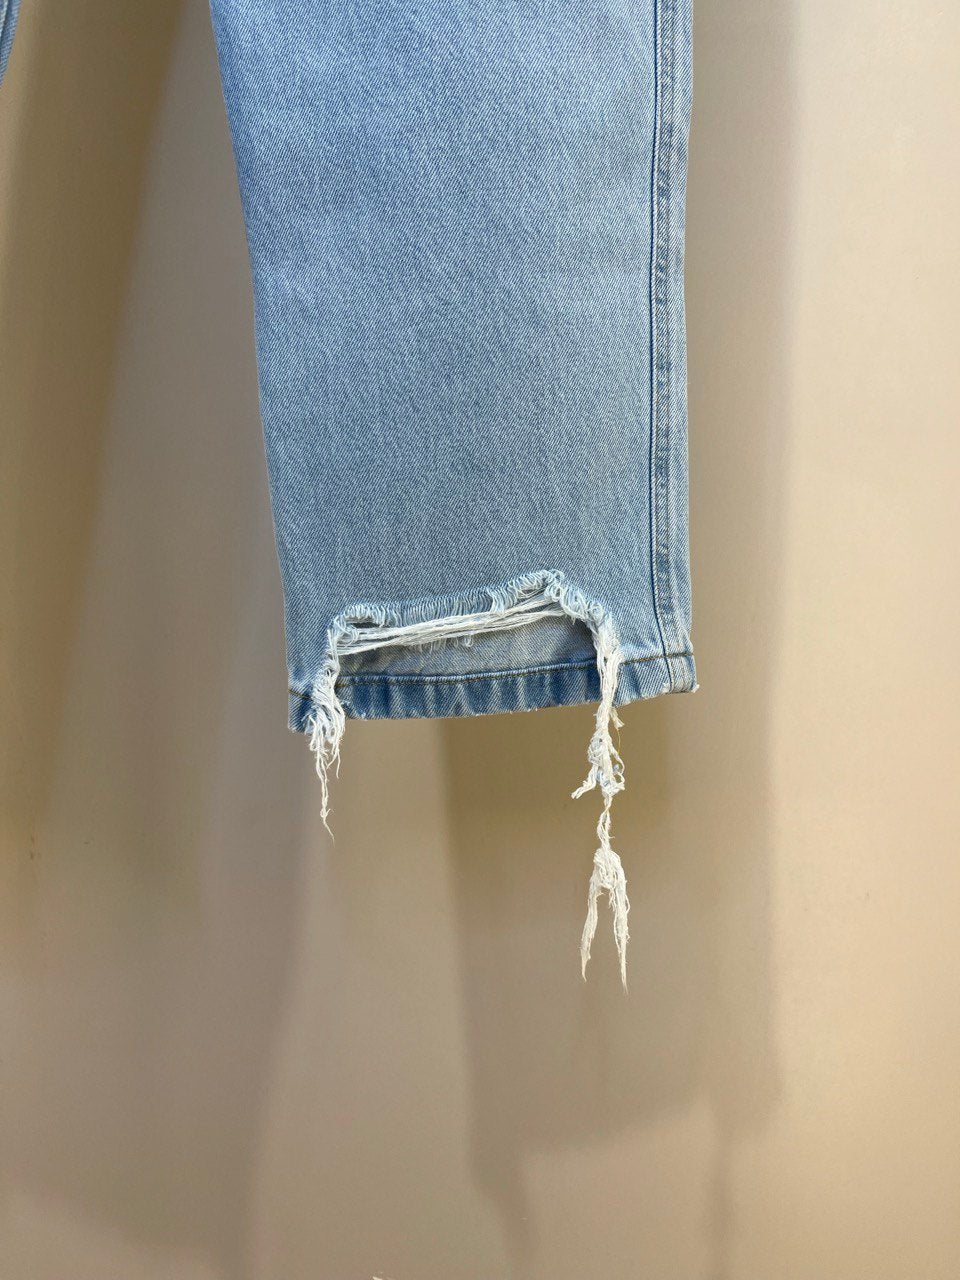 Jeans Kate rotture sul fondo